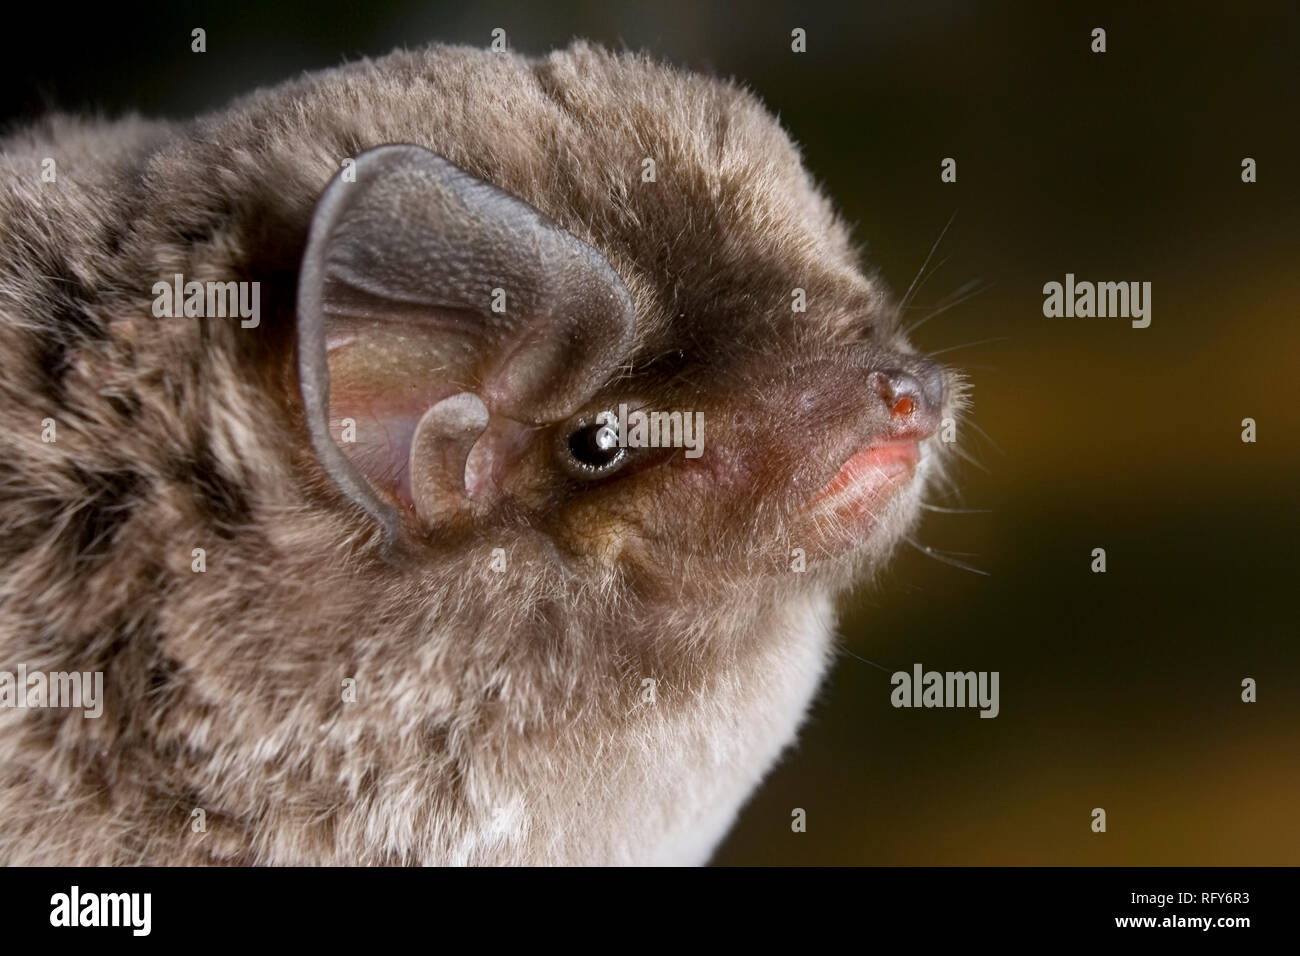 African long-fingered bat (Miniopterus africanus) portrait, coastal Kenya. Stock Photo